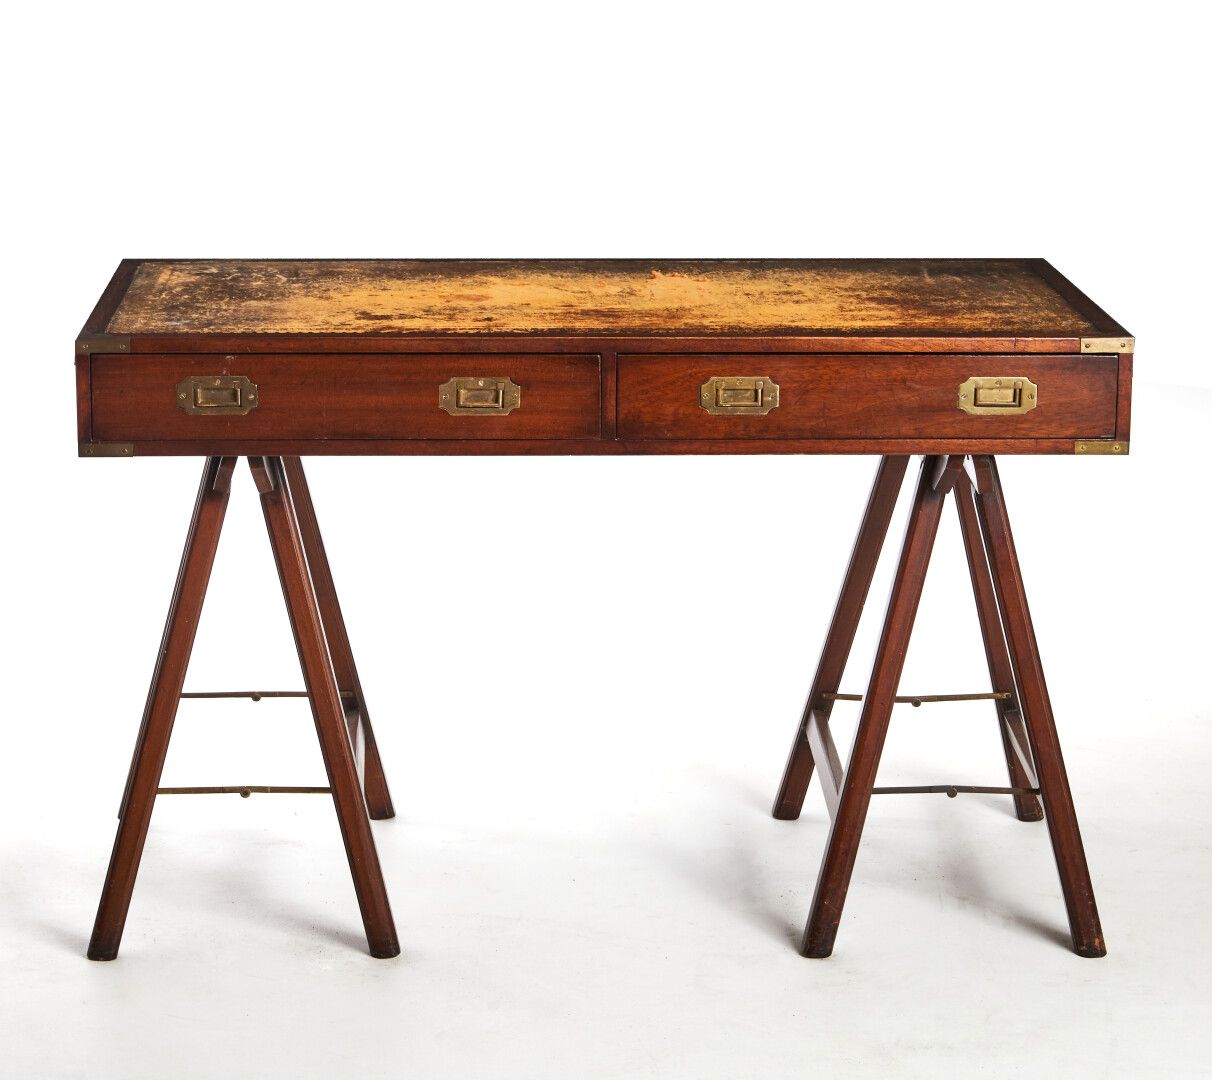 Null Mahogany veneer boat desk.

2 large drawers. Copper spandrels. Legs with tr&hellip;